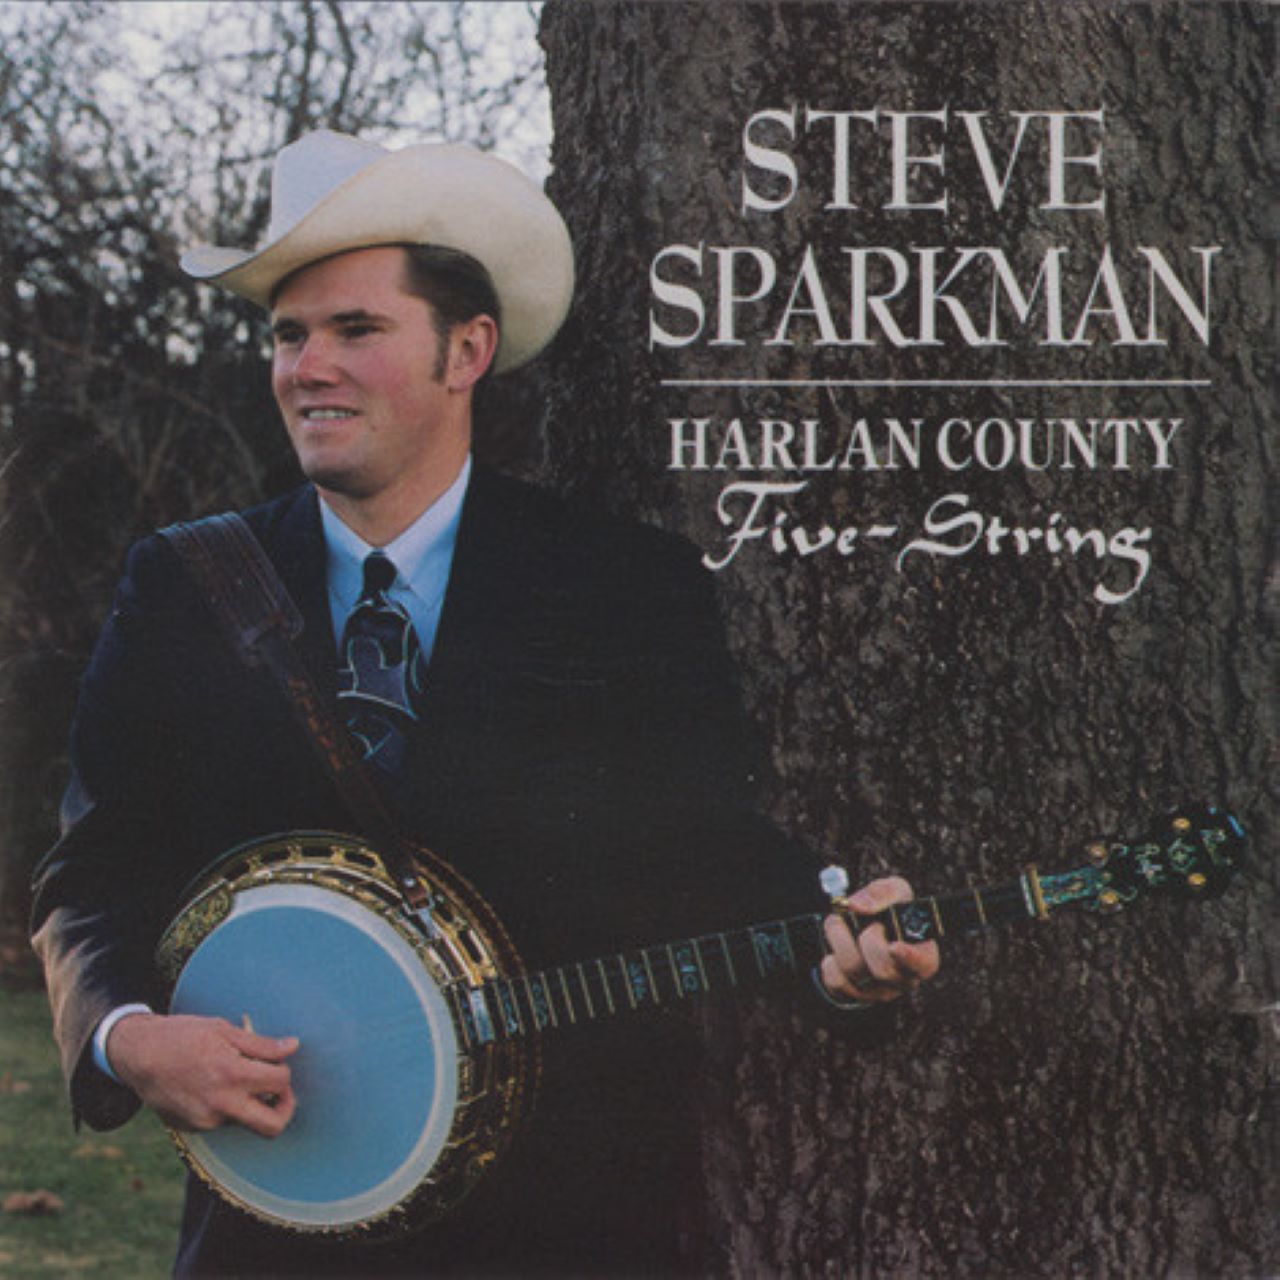 Steve Sparkman - Harlan County Five-String cover album